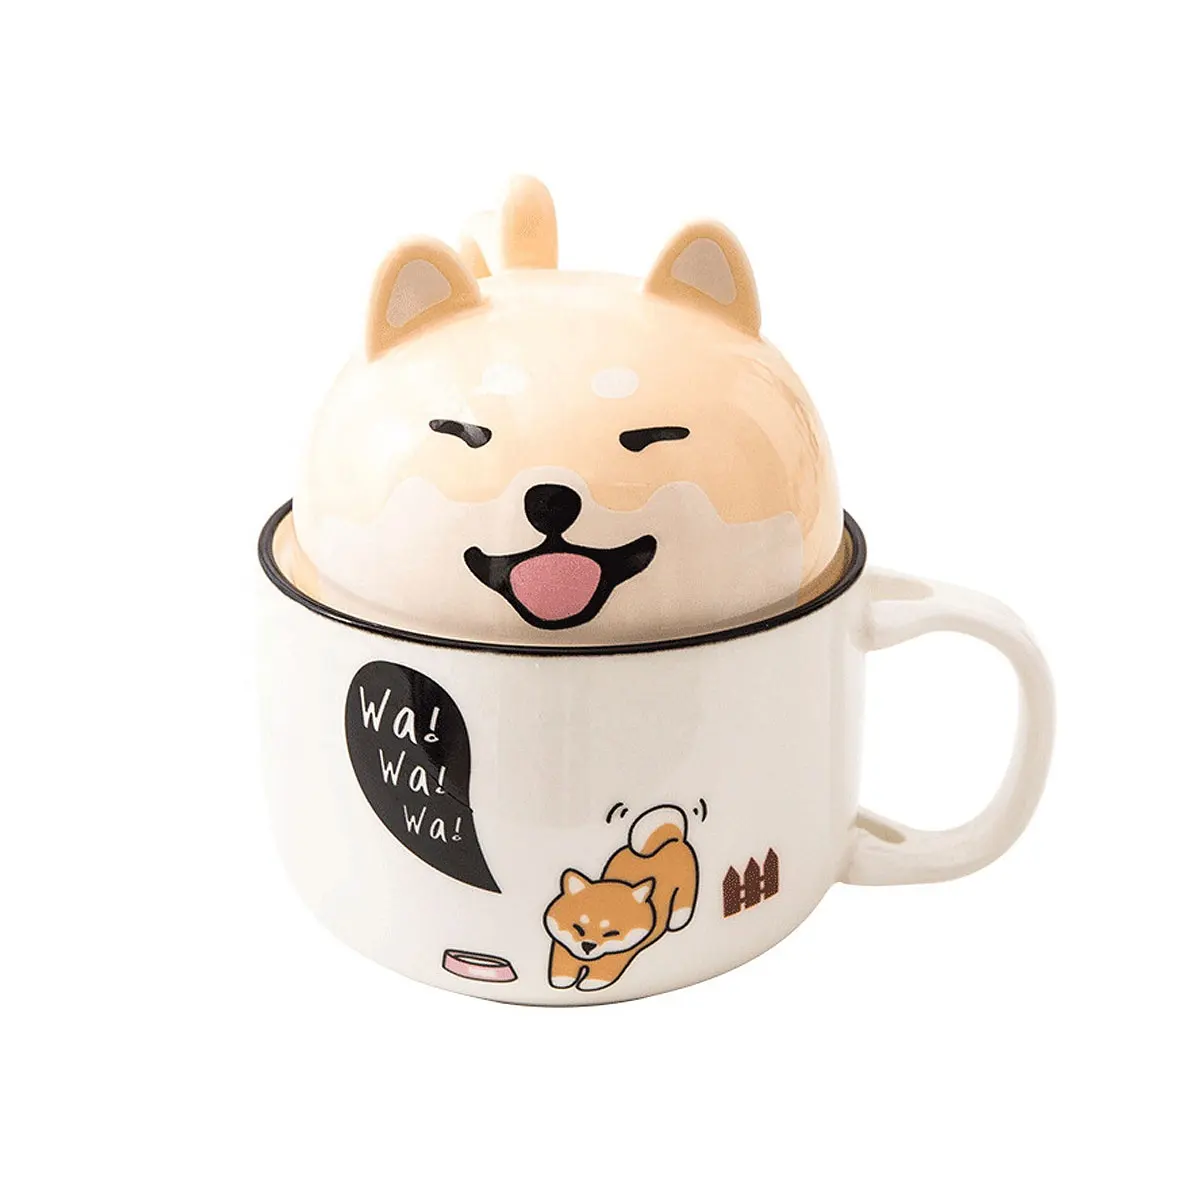 White Ceramic Mug Coffee Cute Fun Cartoon Animal Office Mug with Spoon Lid Home Breakfast Cup Creative Kawaii Mug